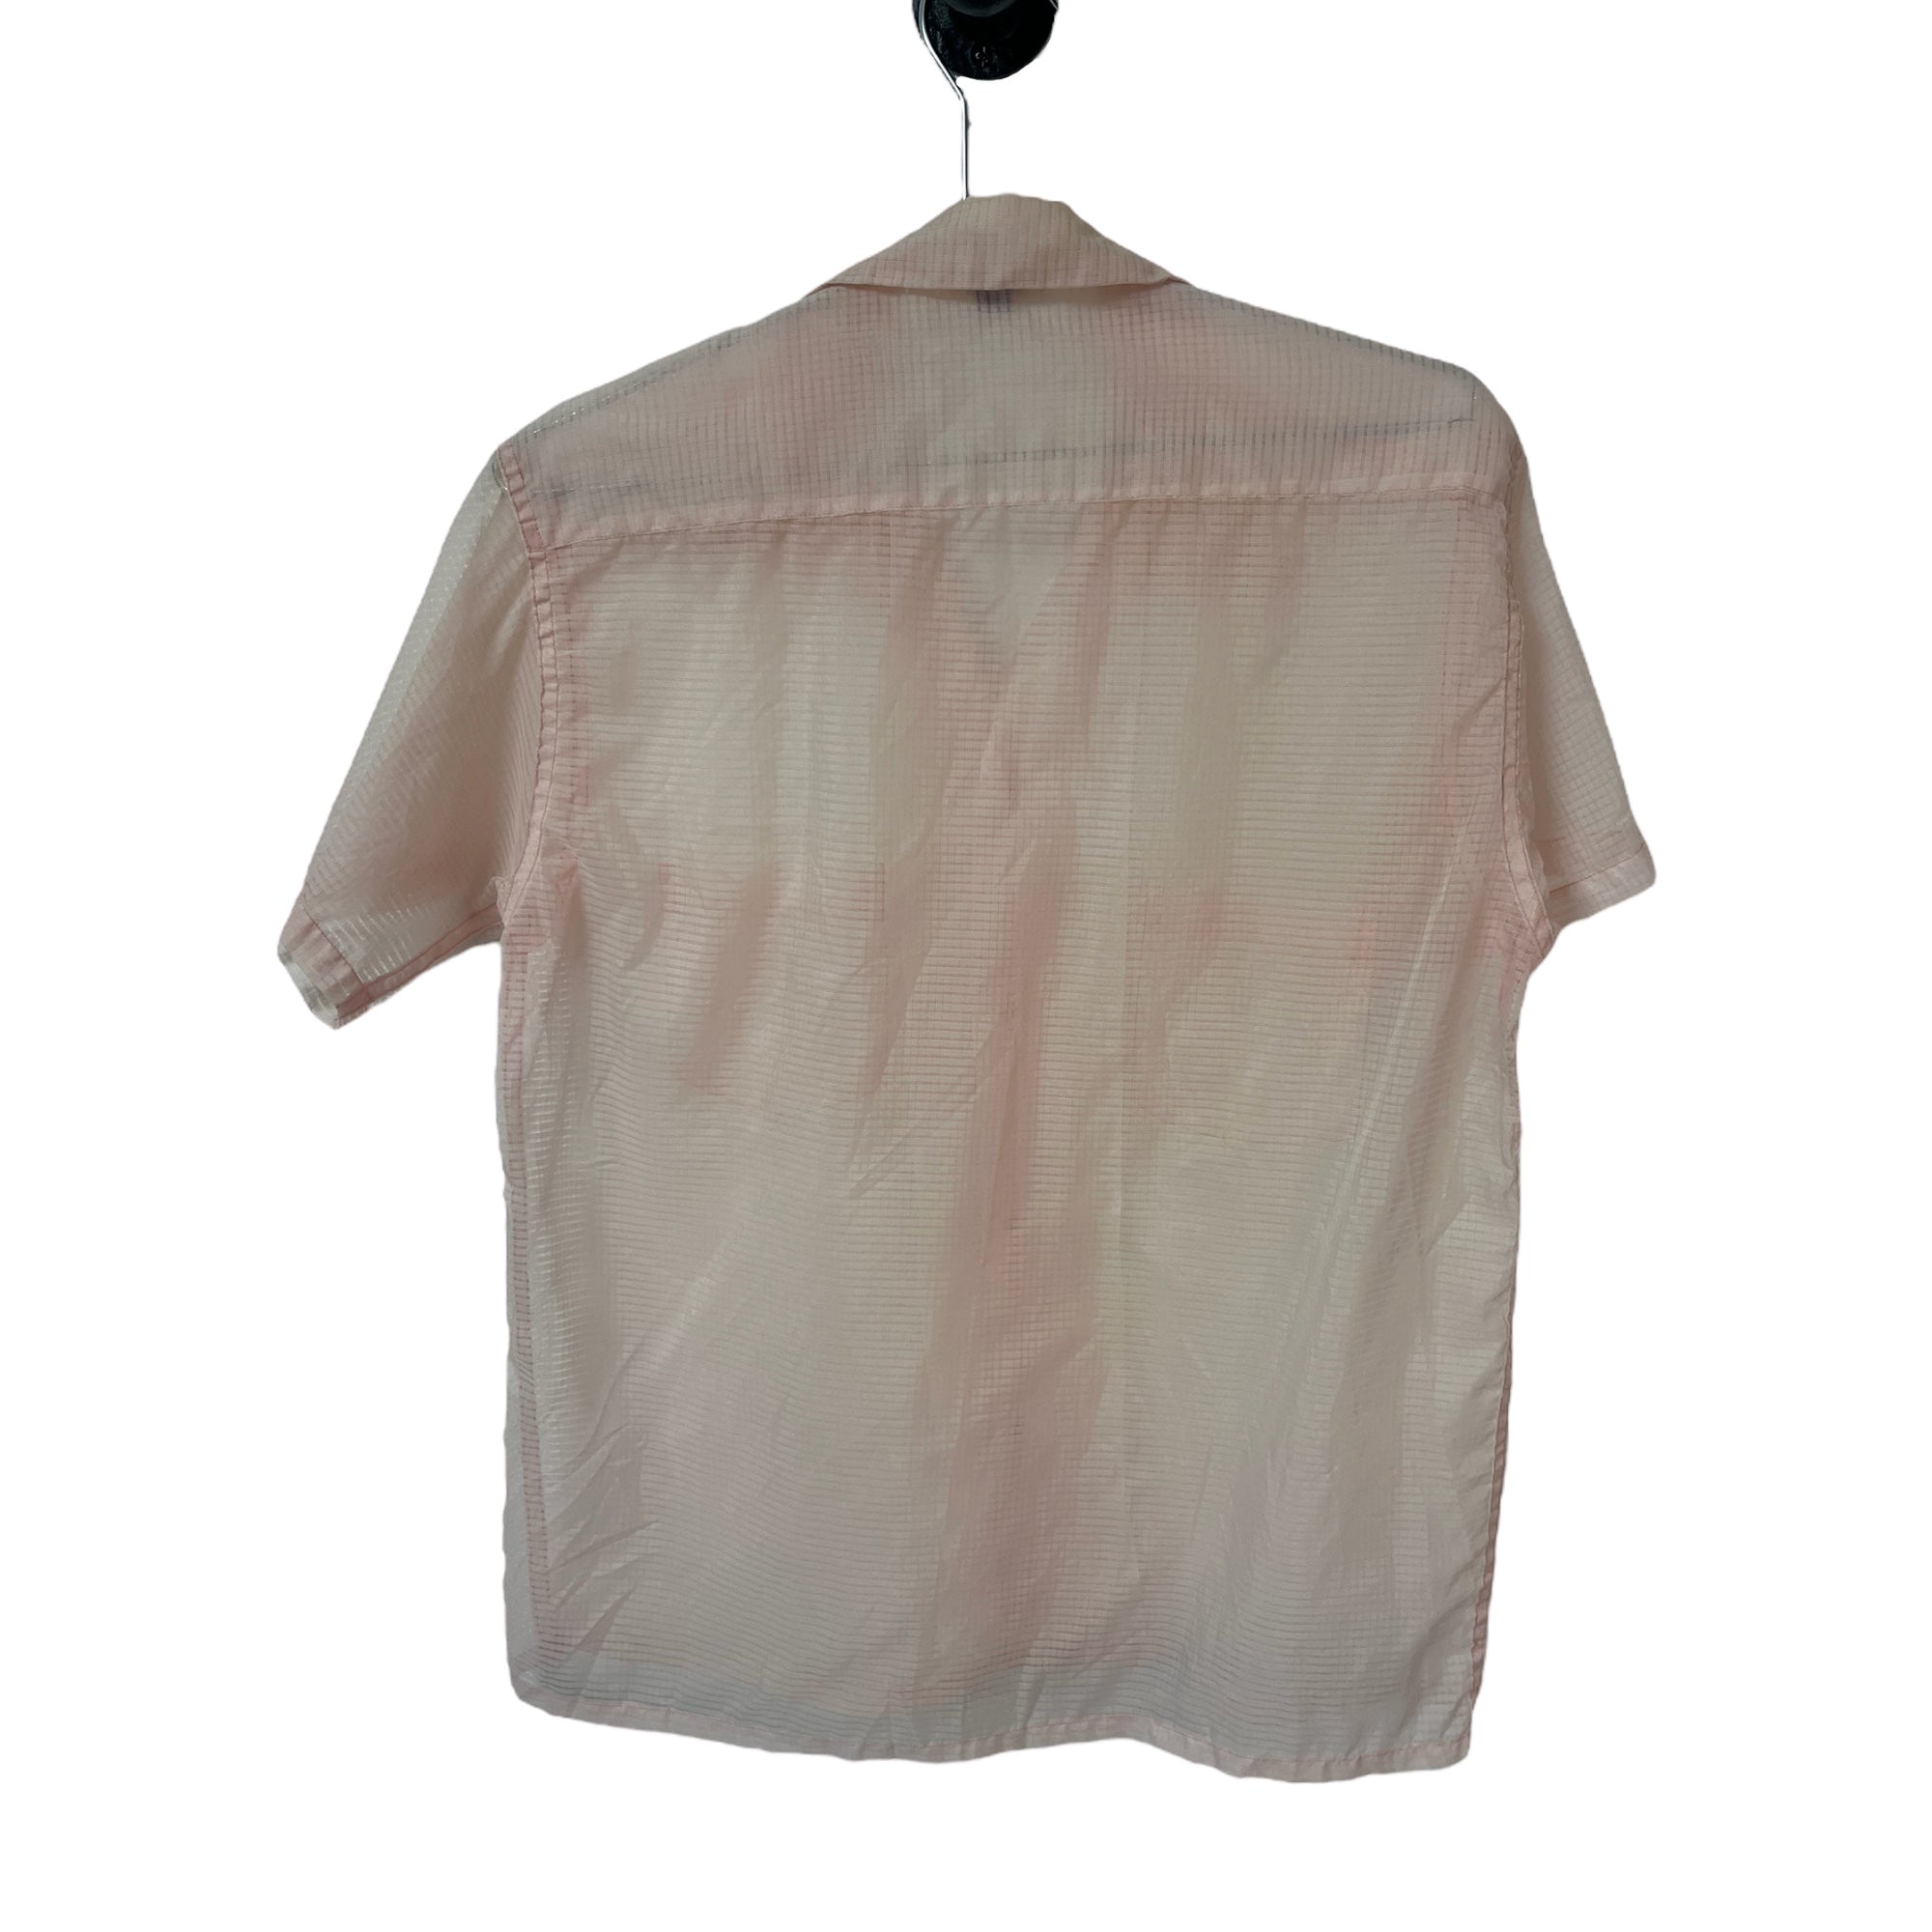 1950s DuPont Nylon Sheer/Translucent Loop Collar Shirt - Baby Pink - M